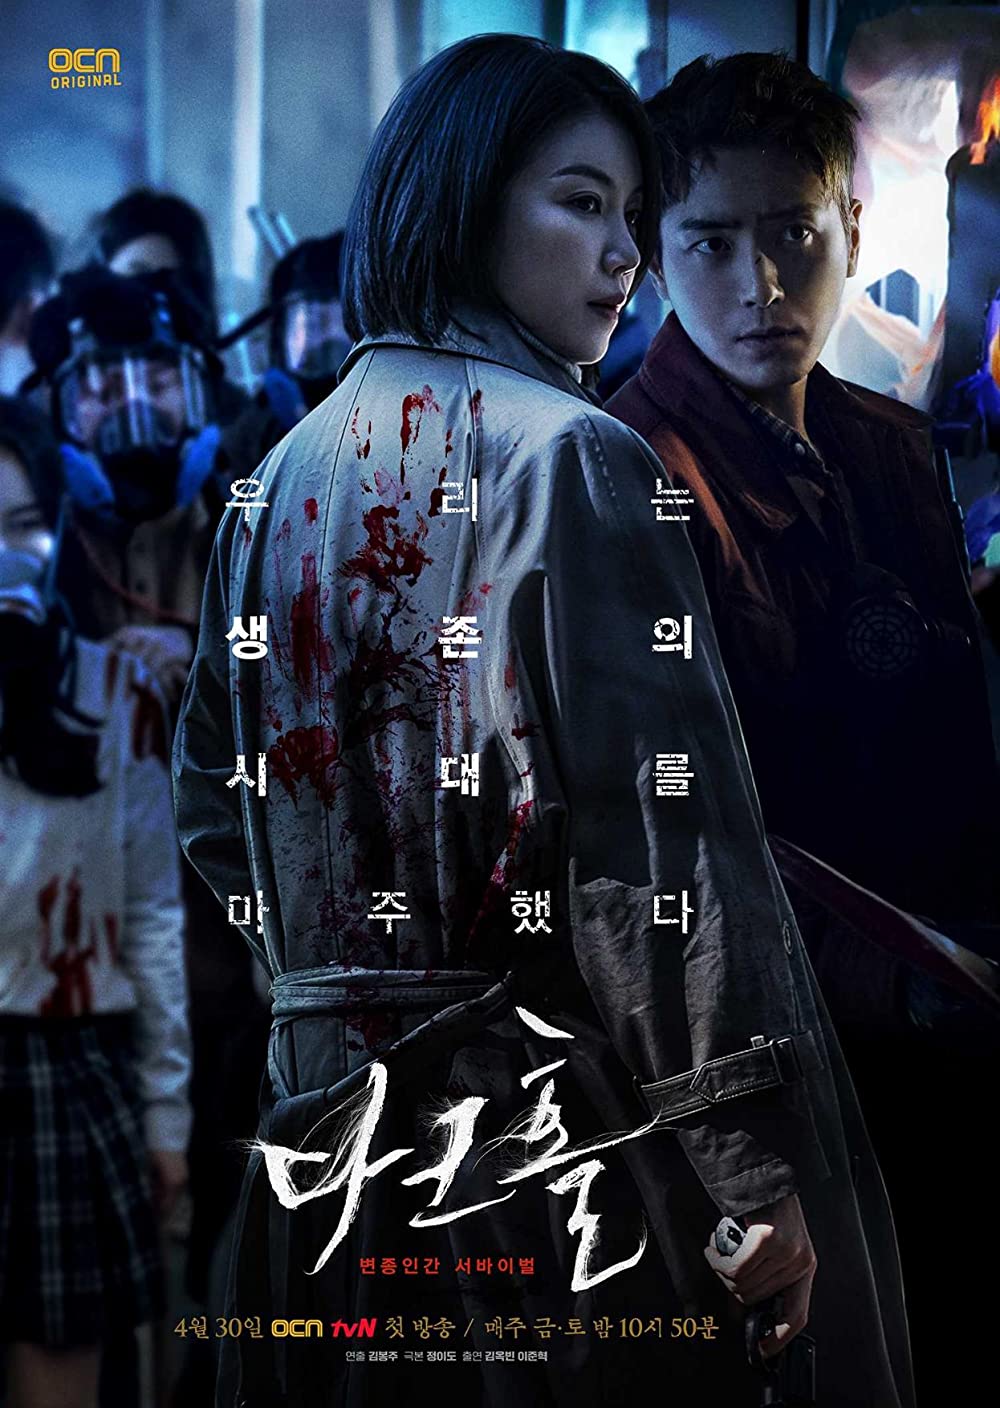 9 Rekomendasi drama Korea kisah misteri, Hometown penuh teka-teki